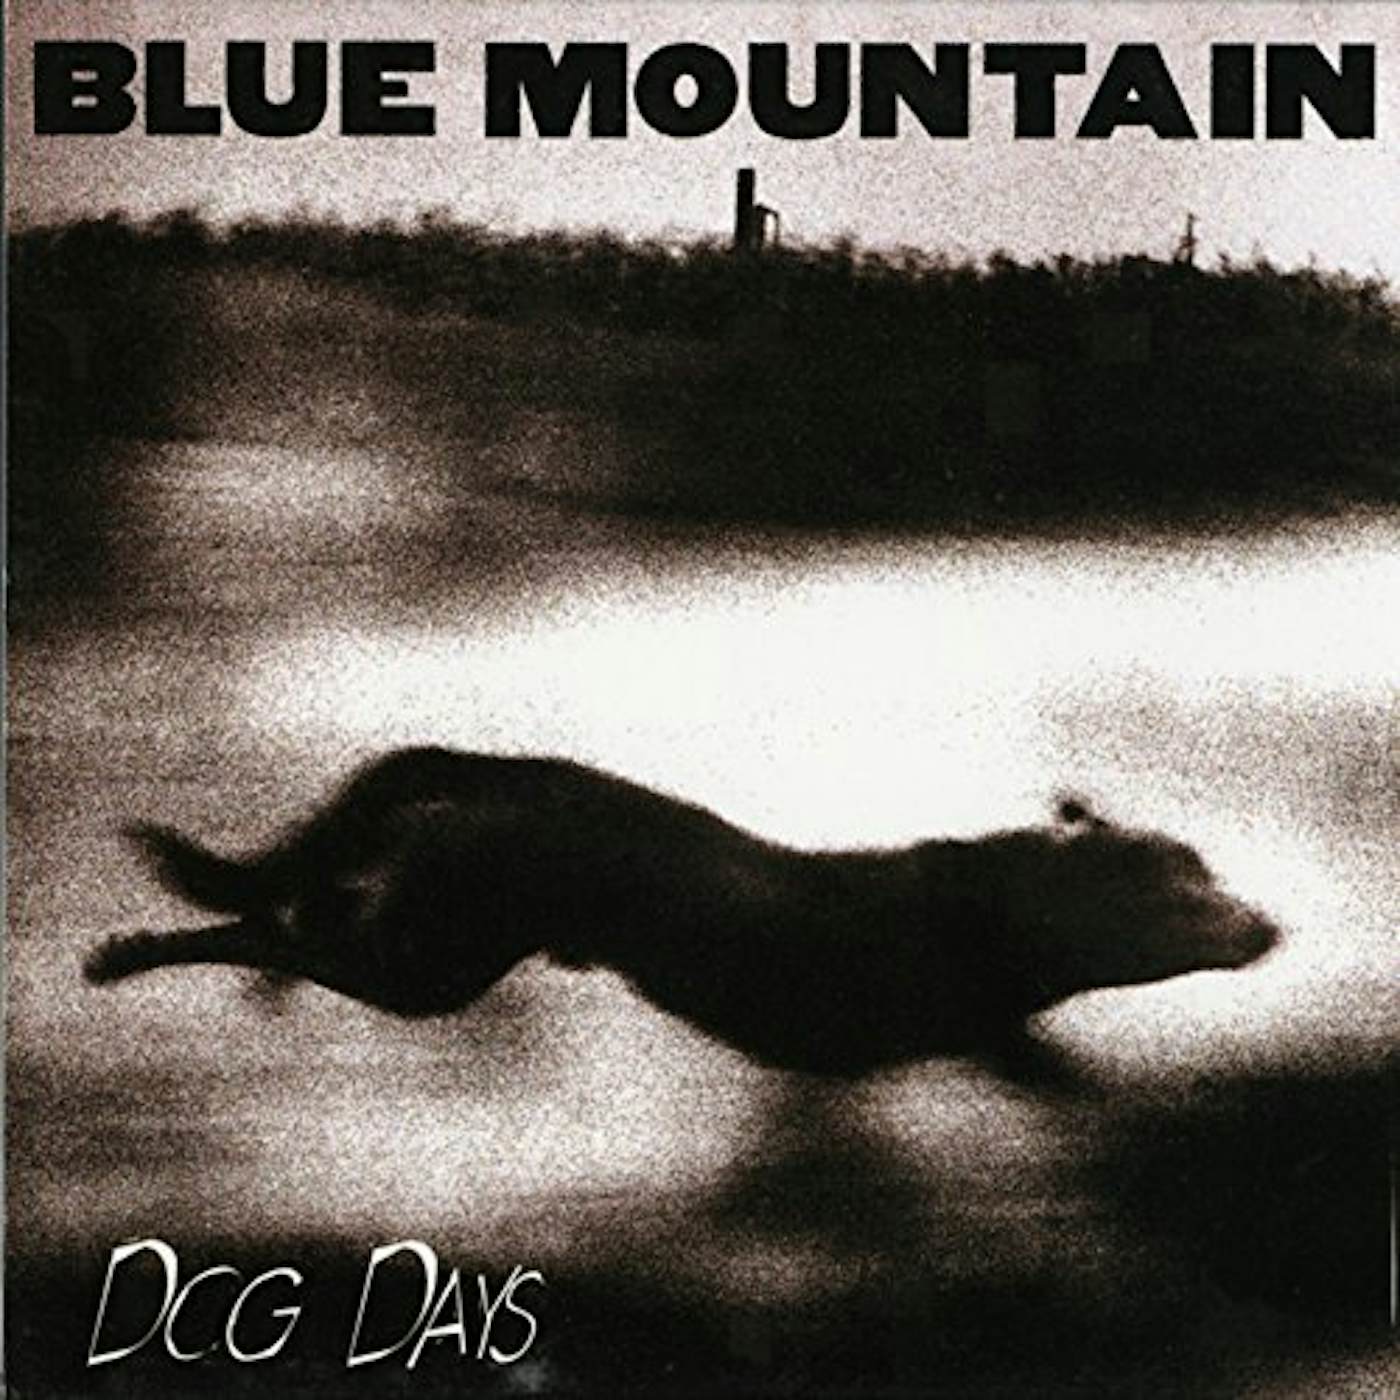 Blue Mountain Dog Days Vinyl Record